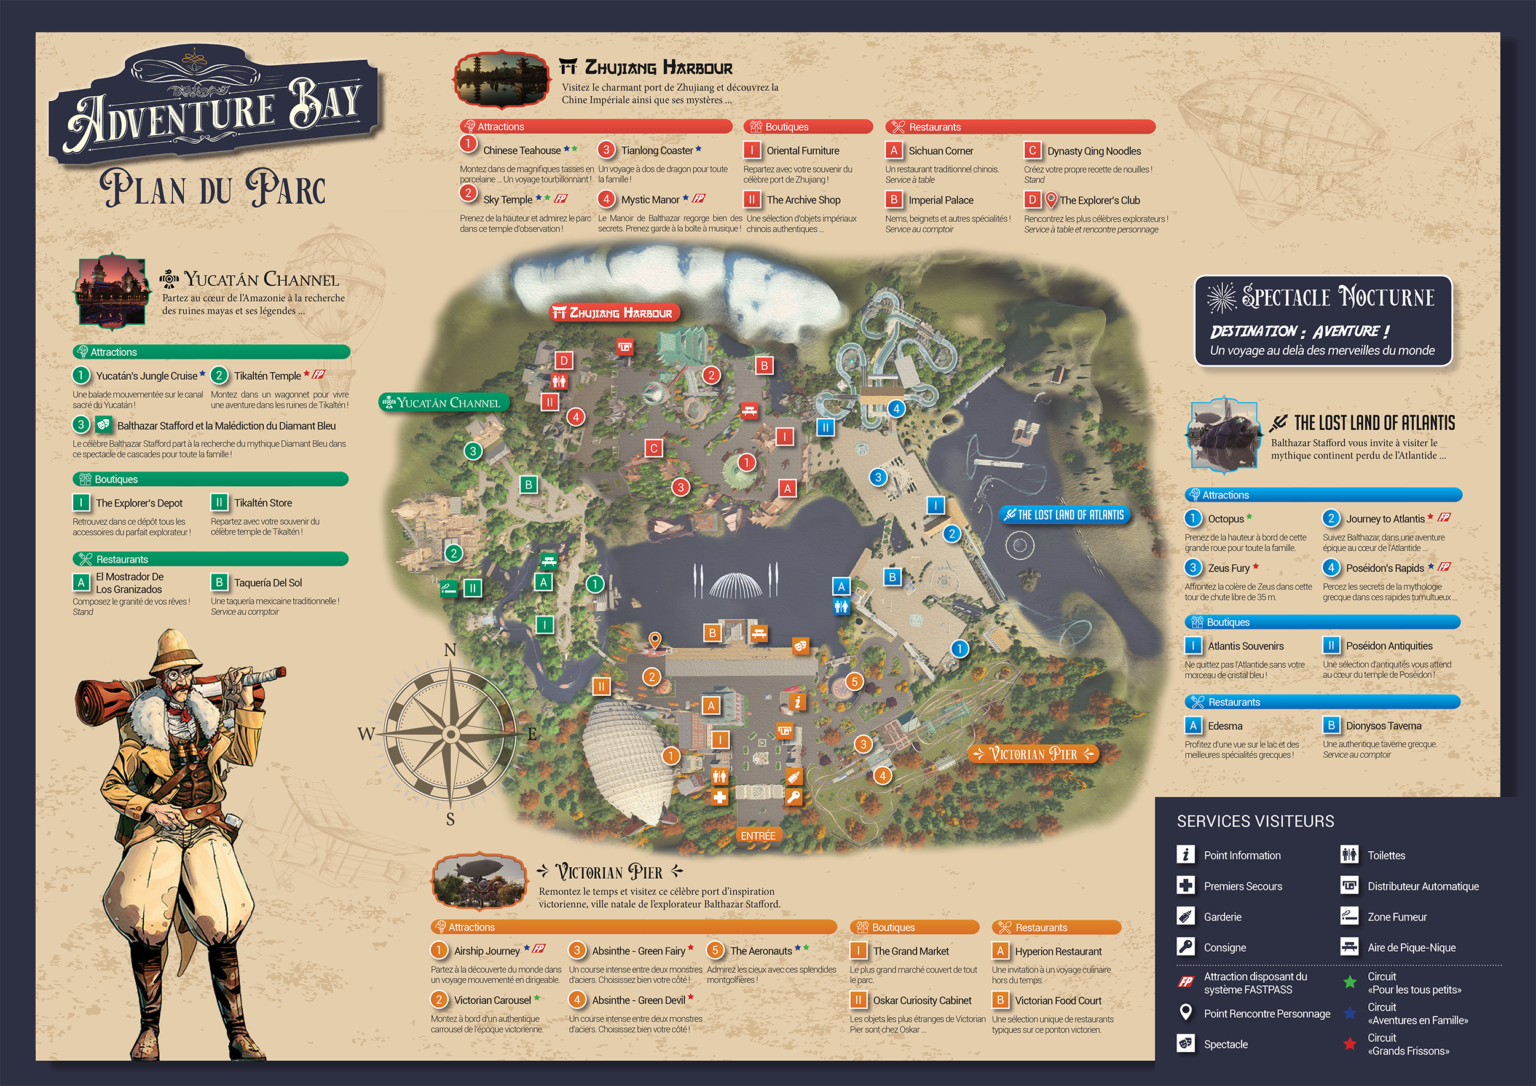 Adventure Bay Park Map 1536x1086 